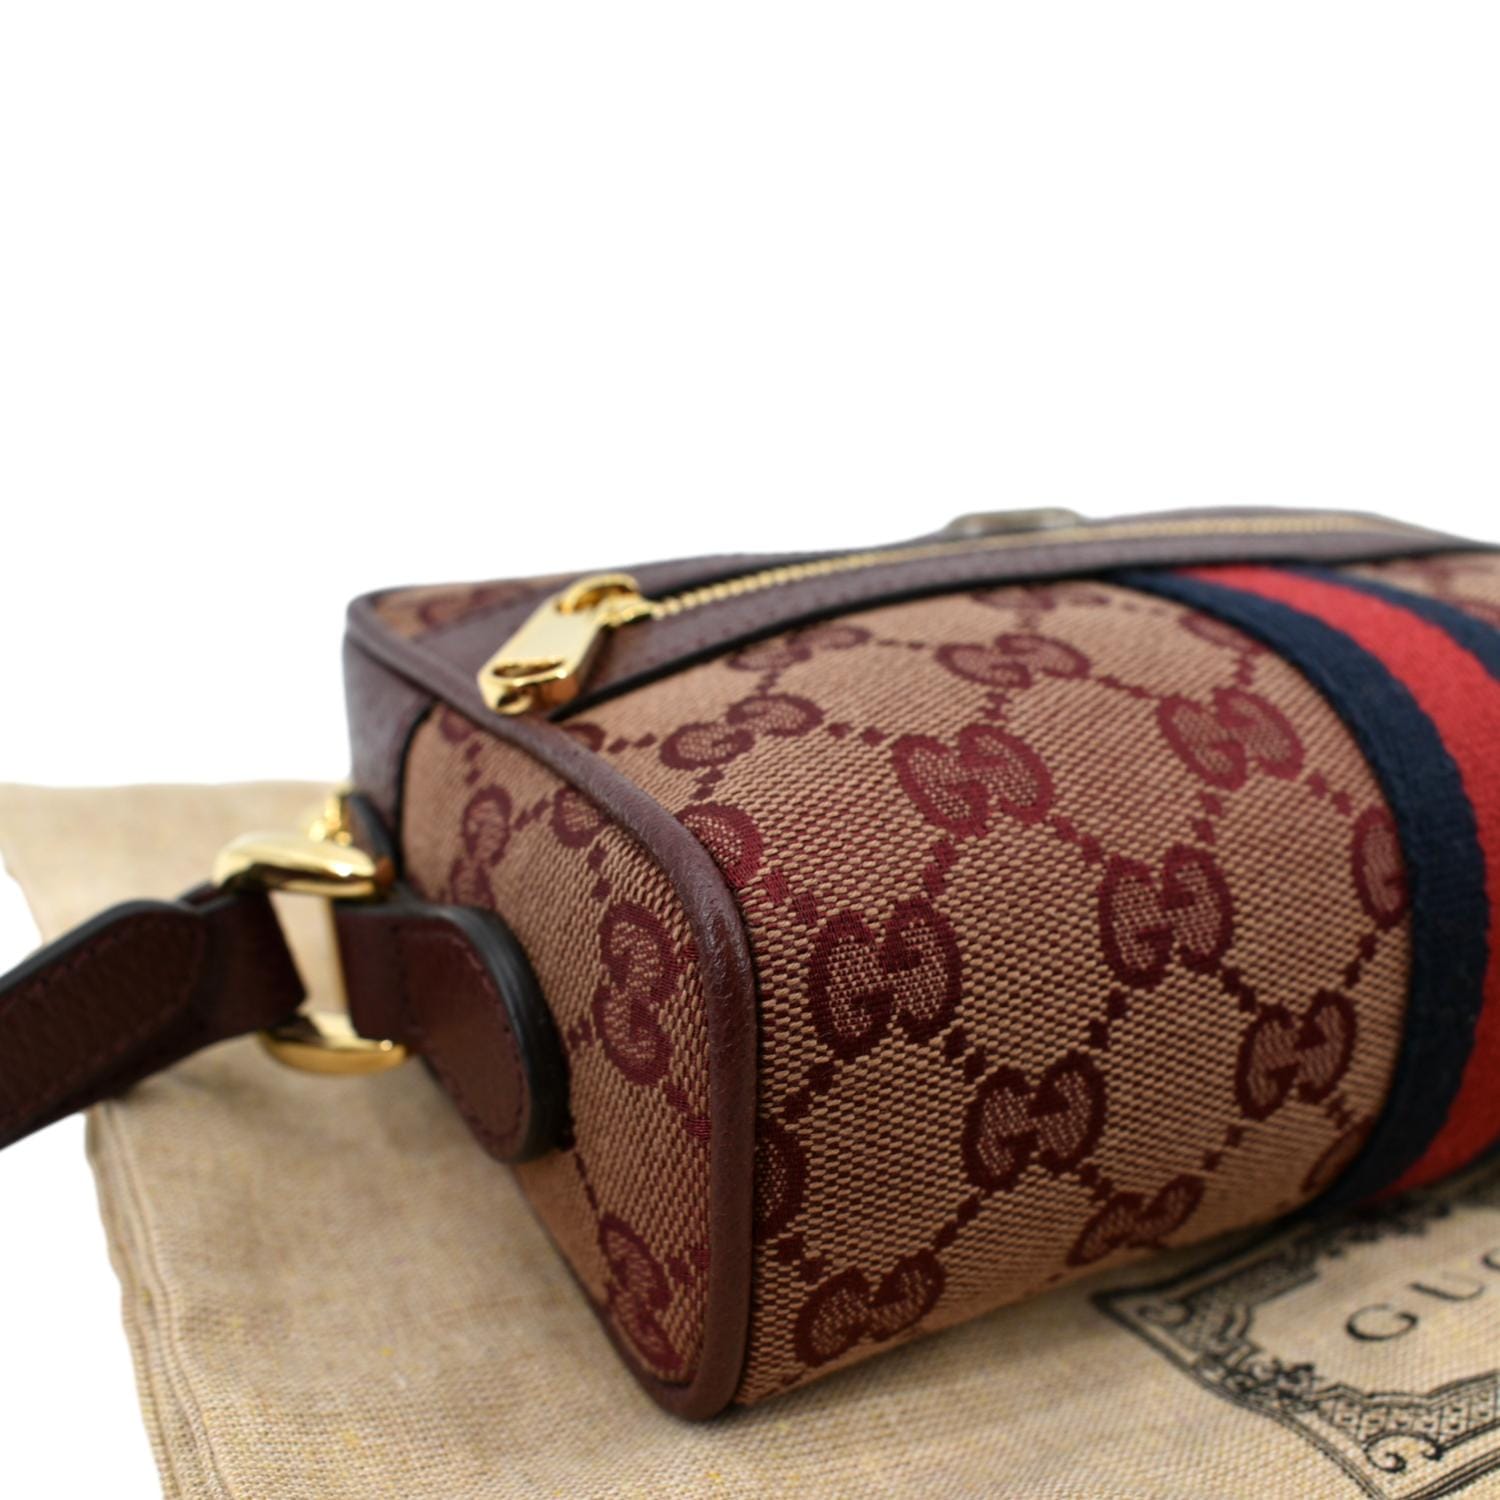 Ophidia GG Mini Crossbody Bag in Brown - Gucci